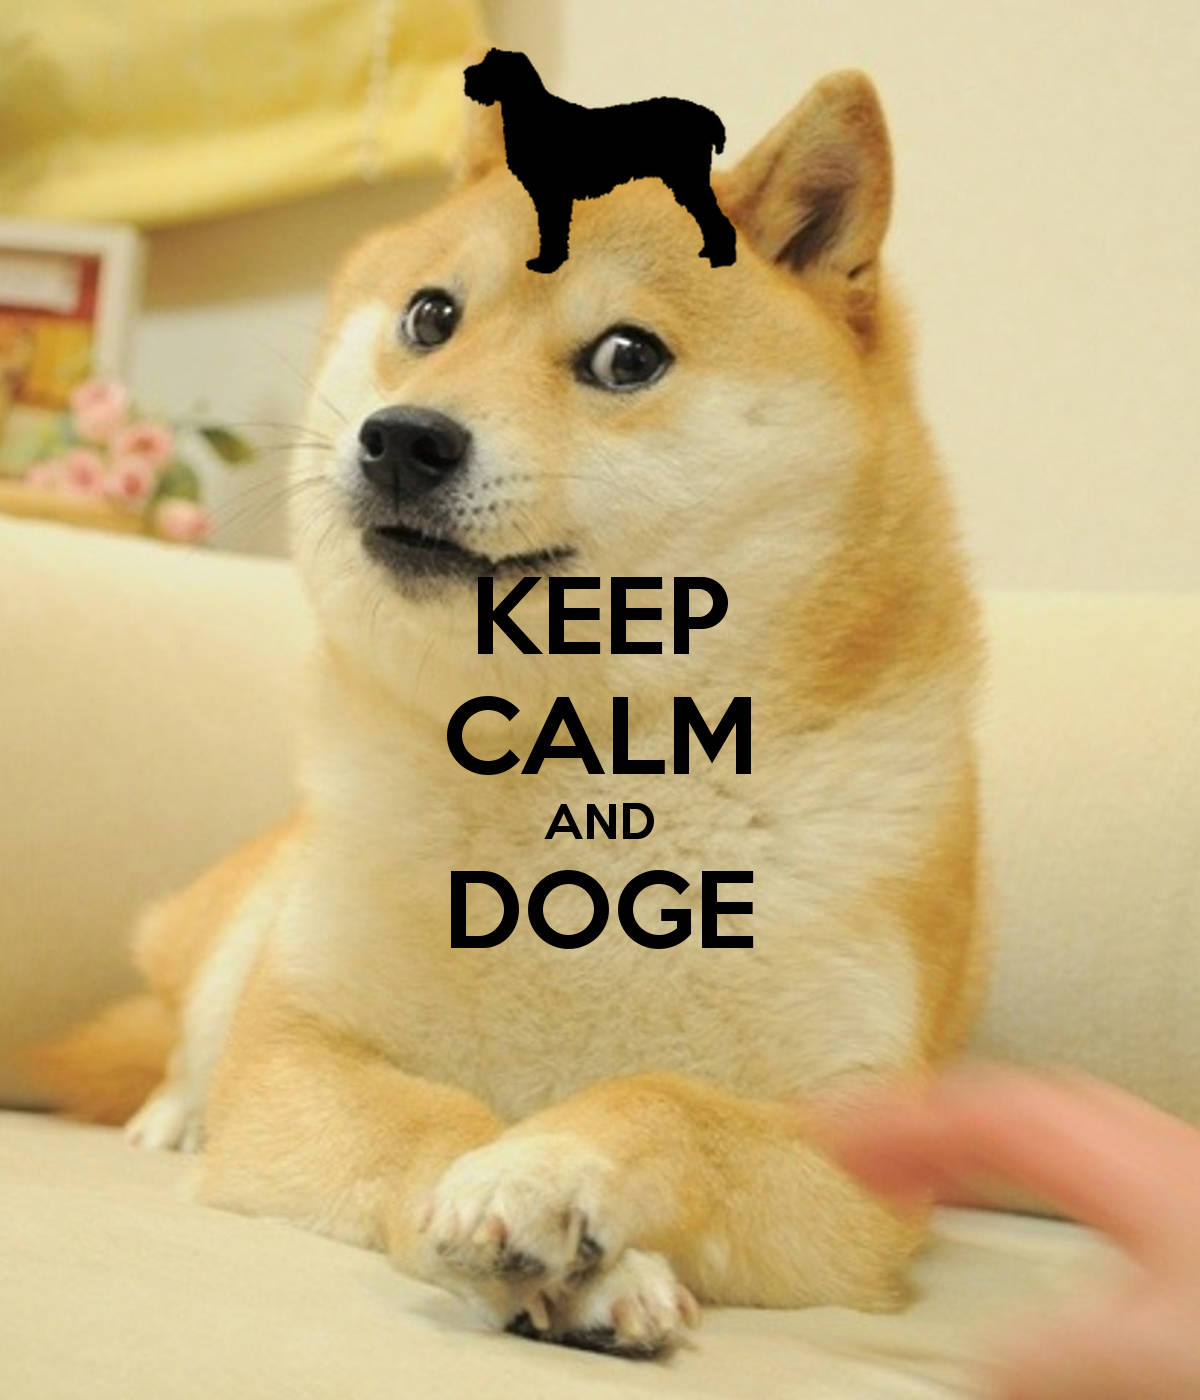 Keep Calm And Doge Meme Wallpaper